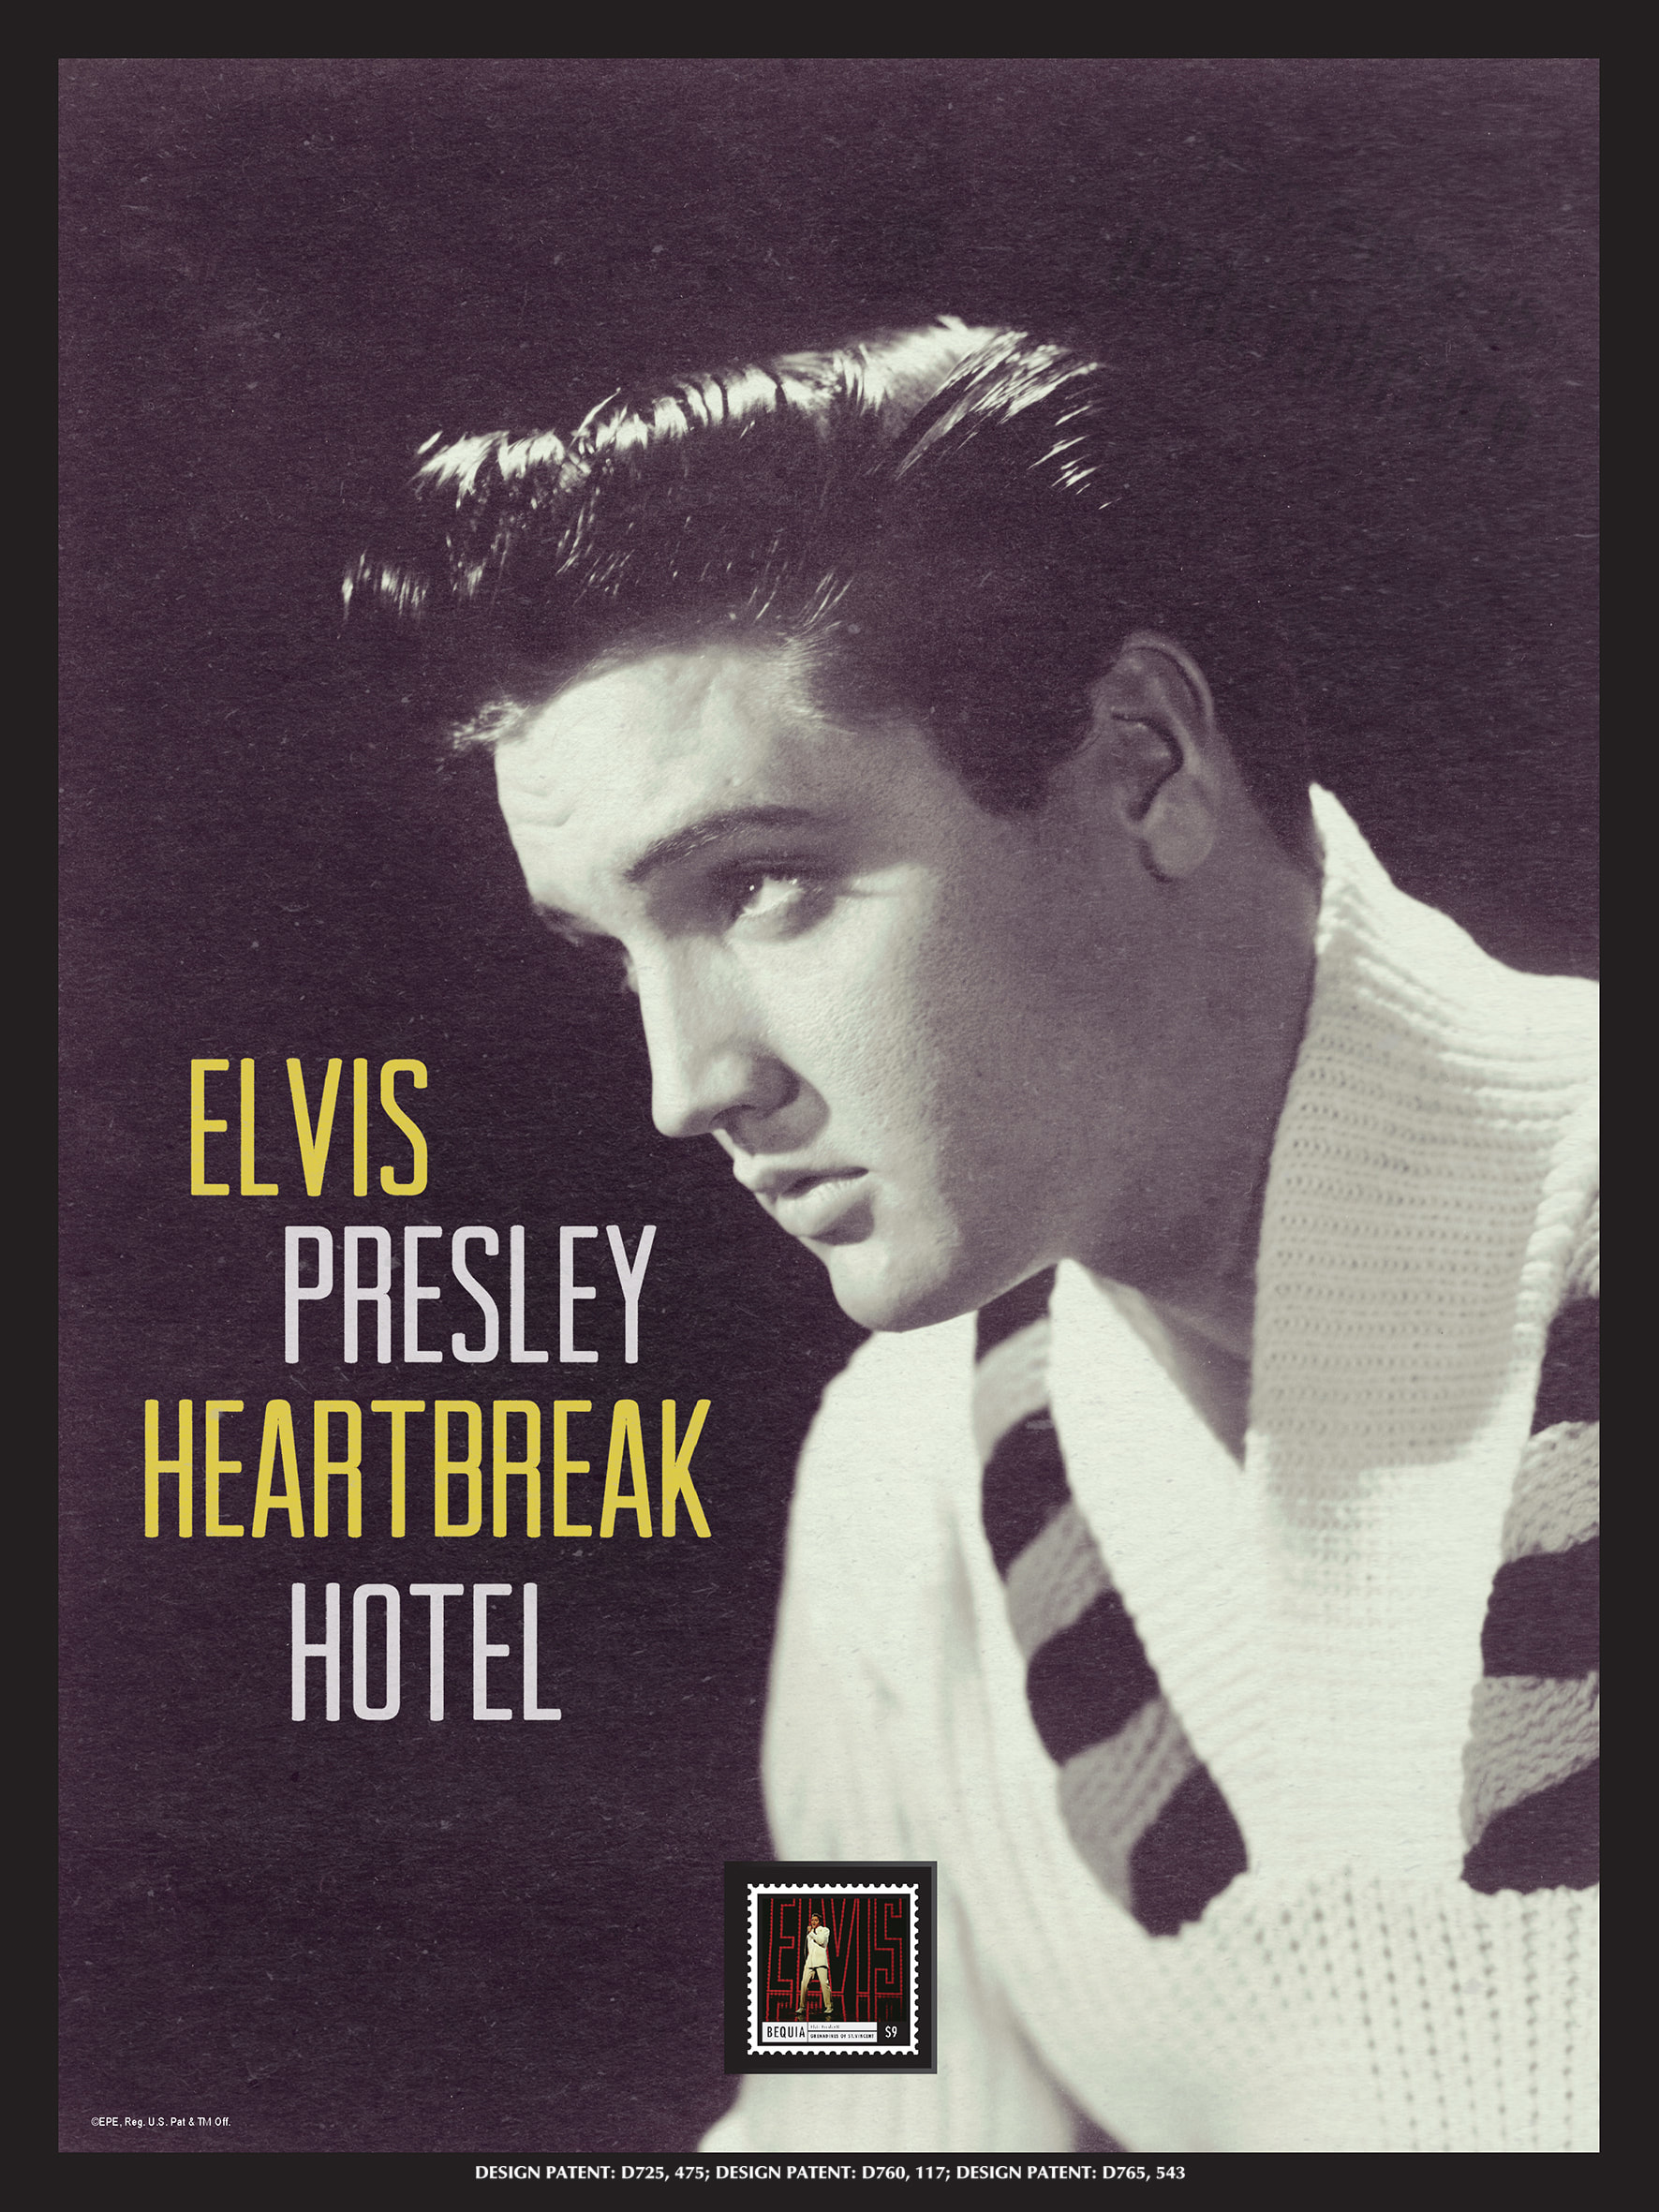 Elvis Presley Heartbreak Hotel Framed Wall Art With Postage Stamp